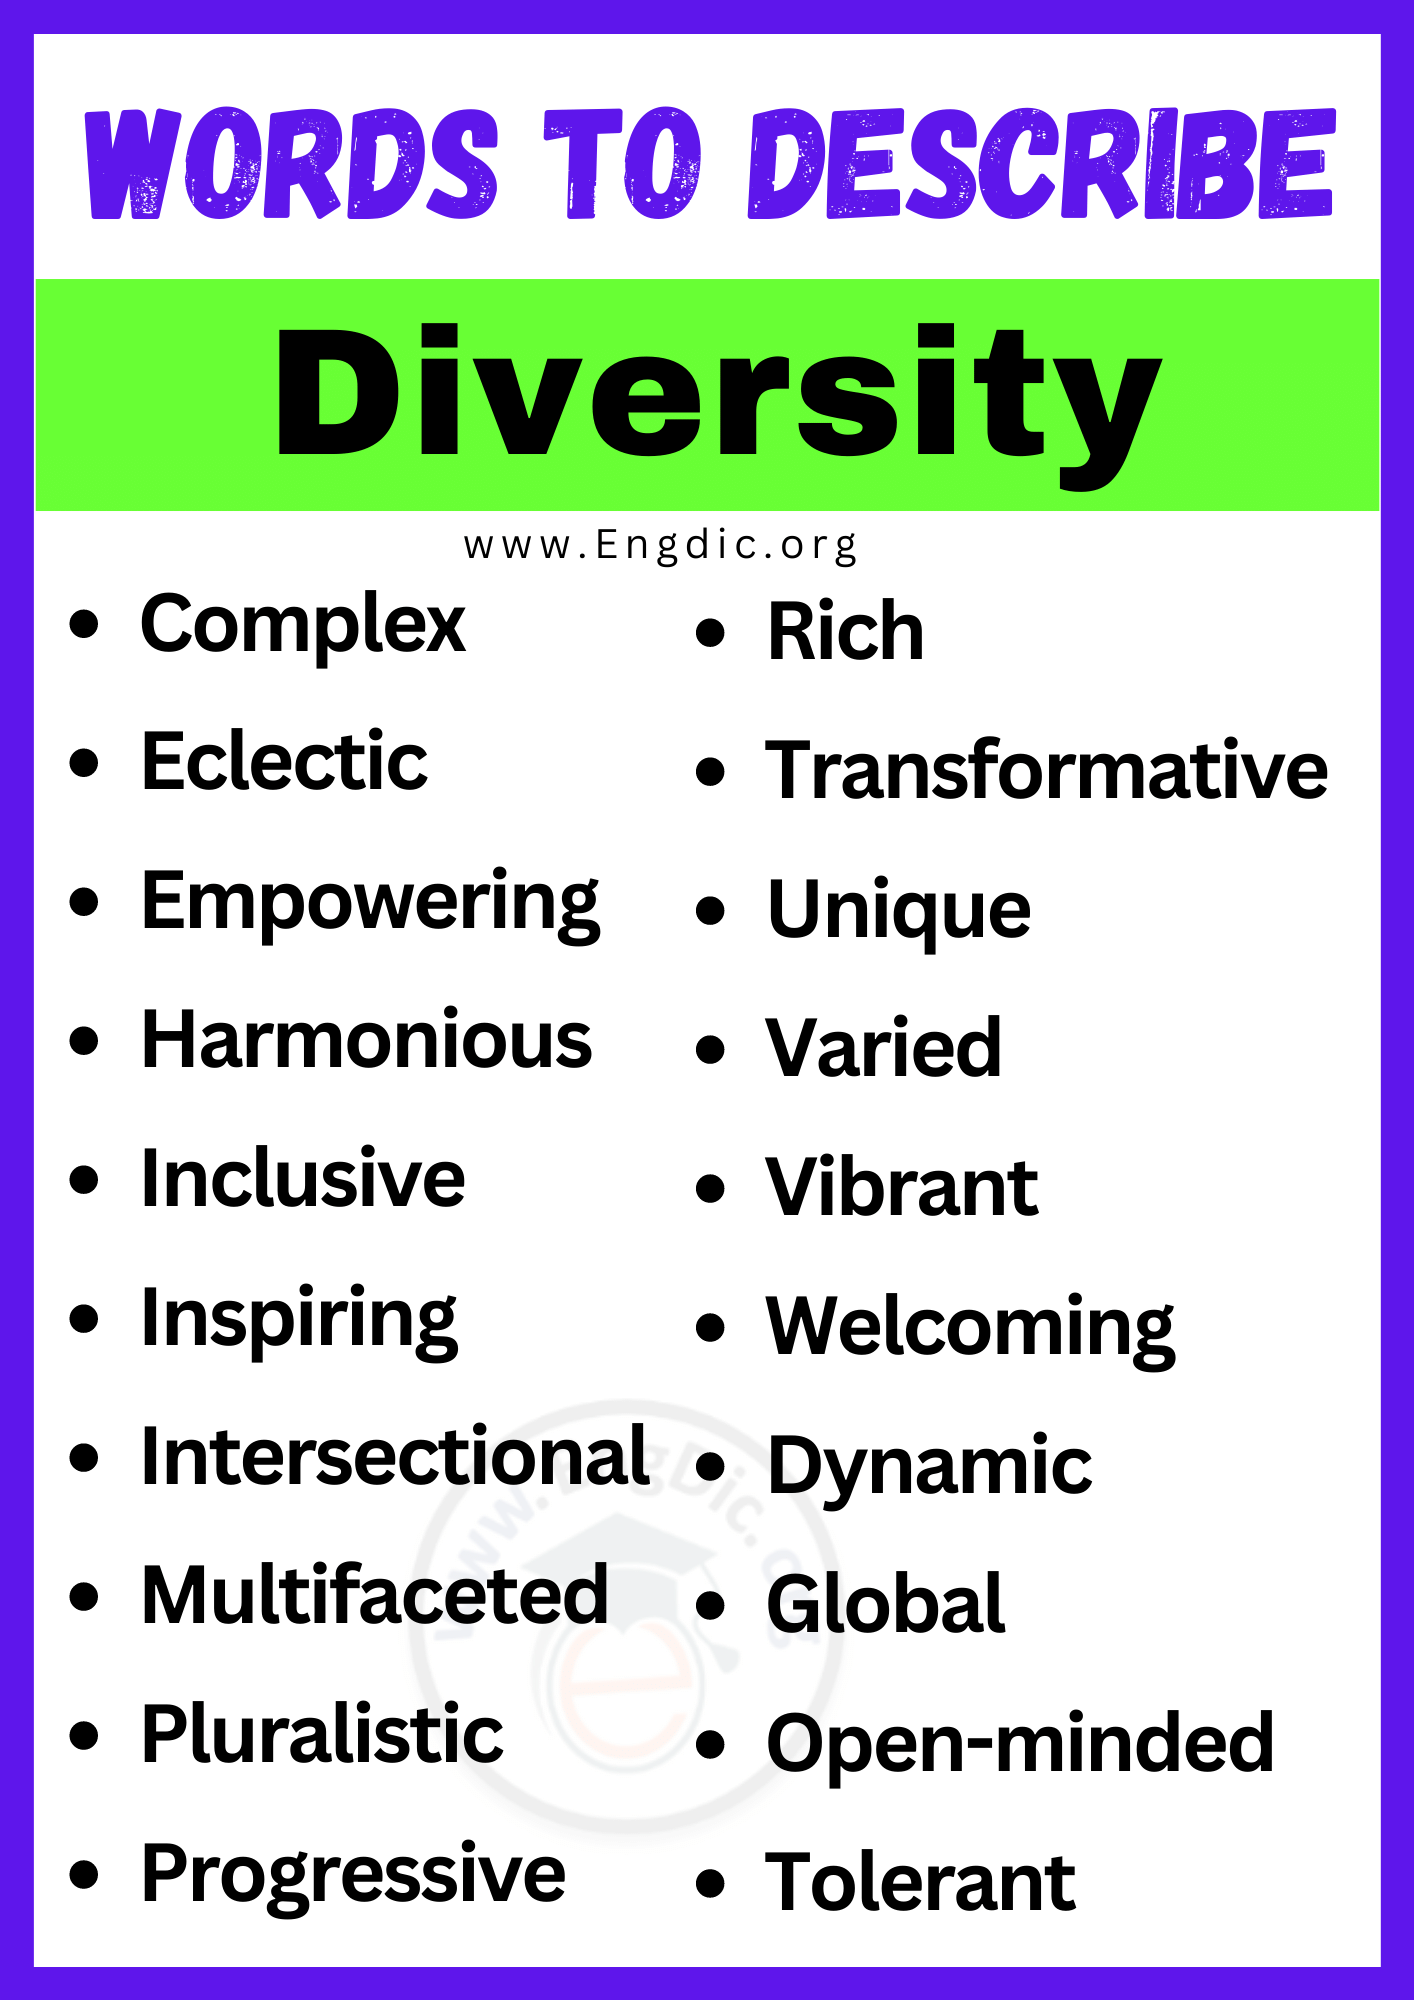 Words to Describe Diversity